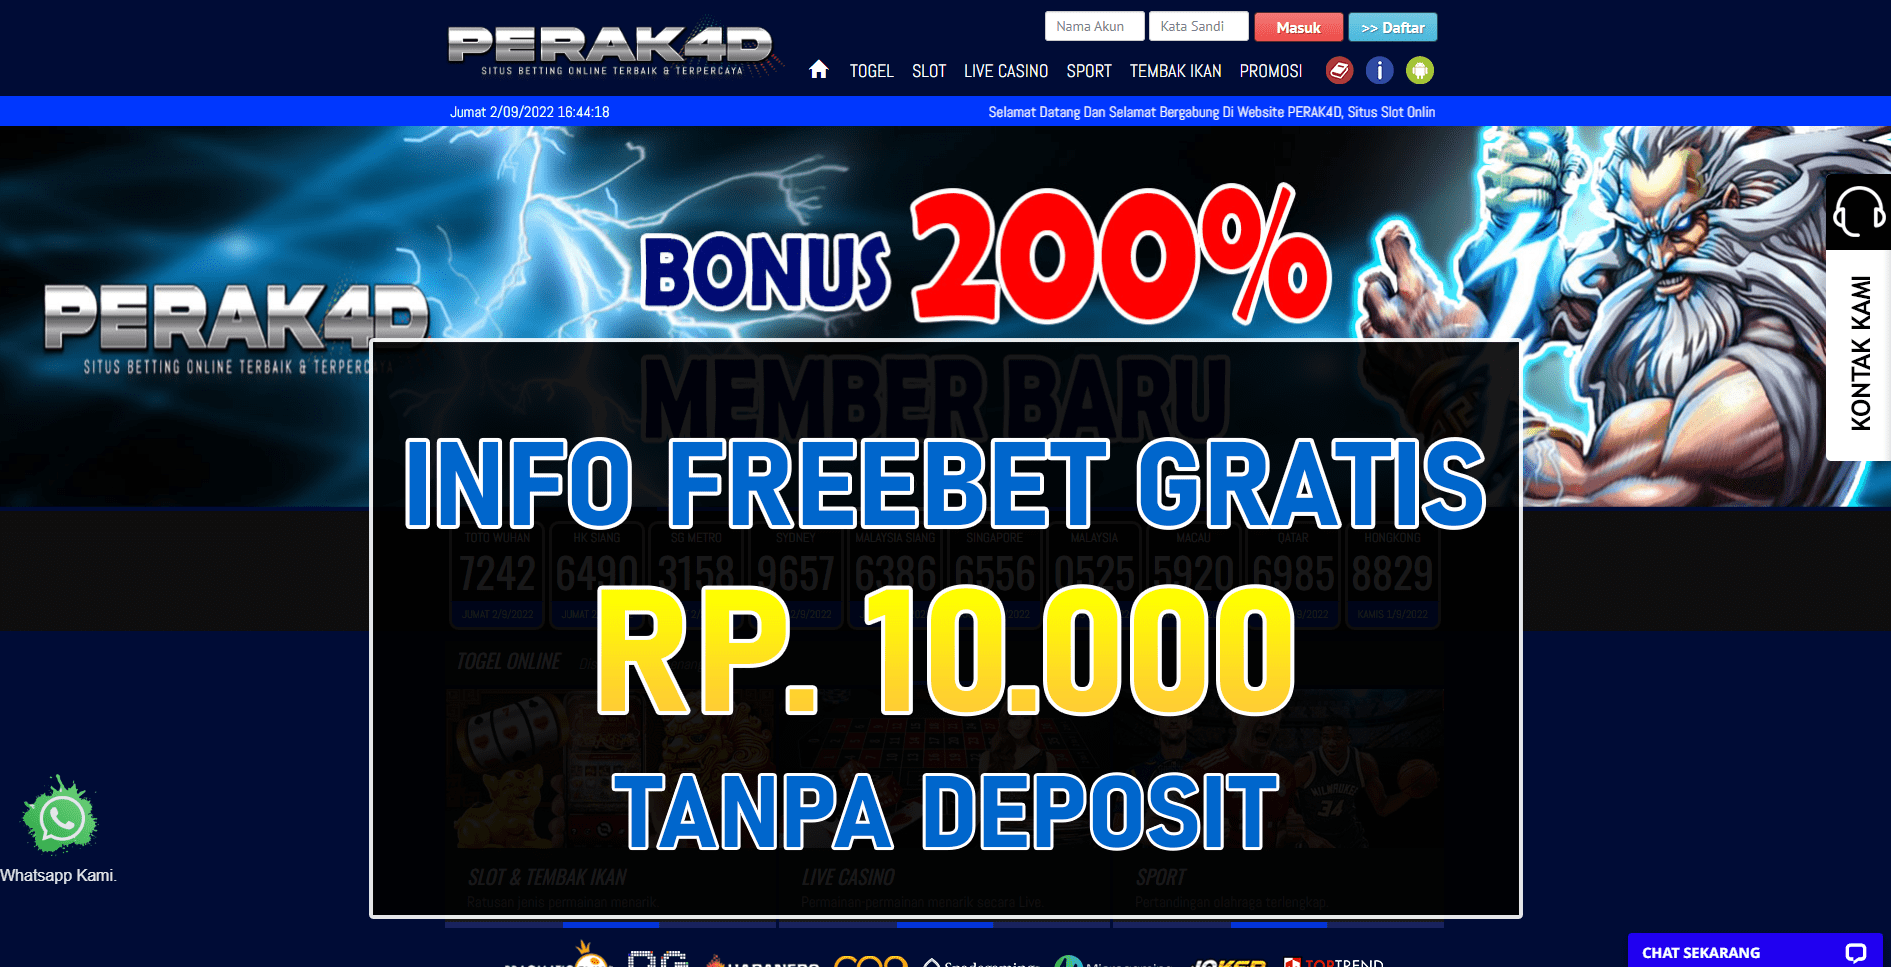 Freebet Gratis PERAK4D